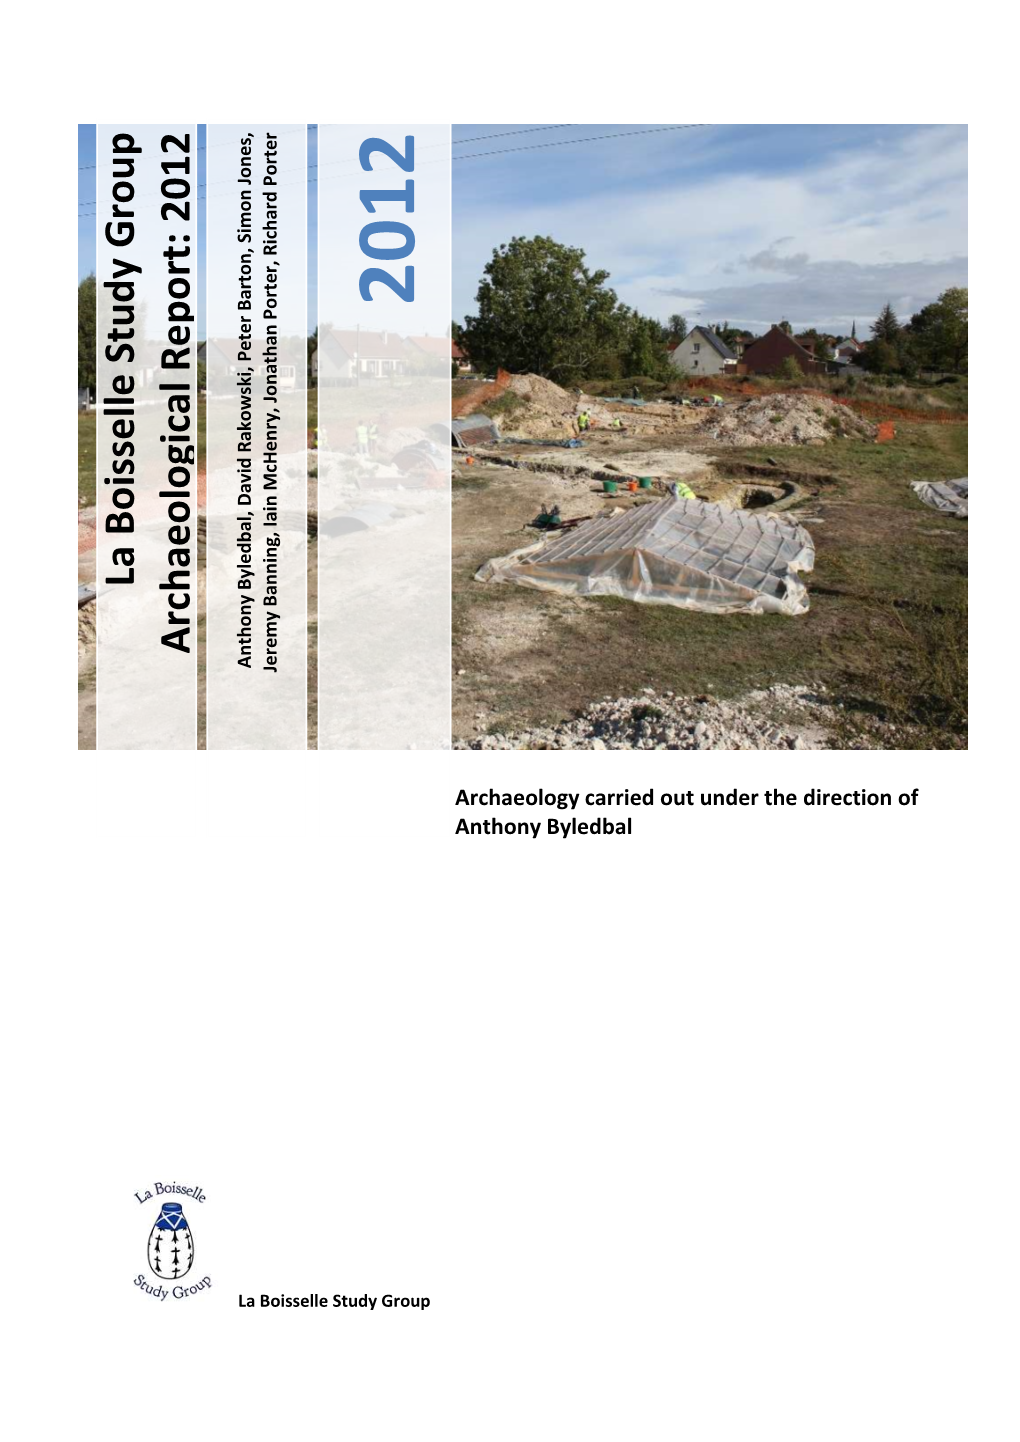 La Boisselle Study Group Archaeological Report: 2012